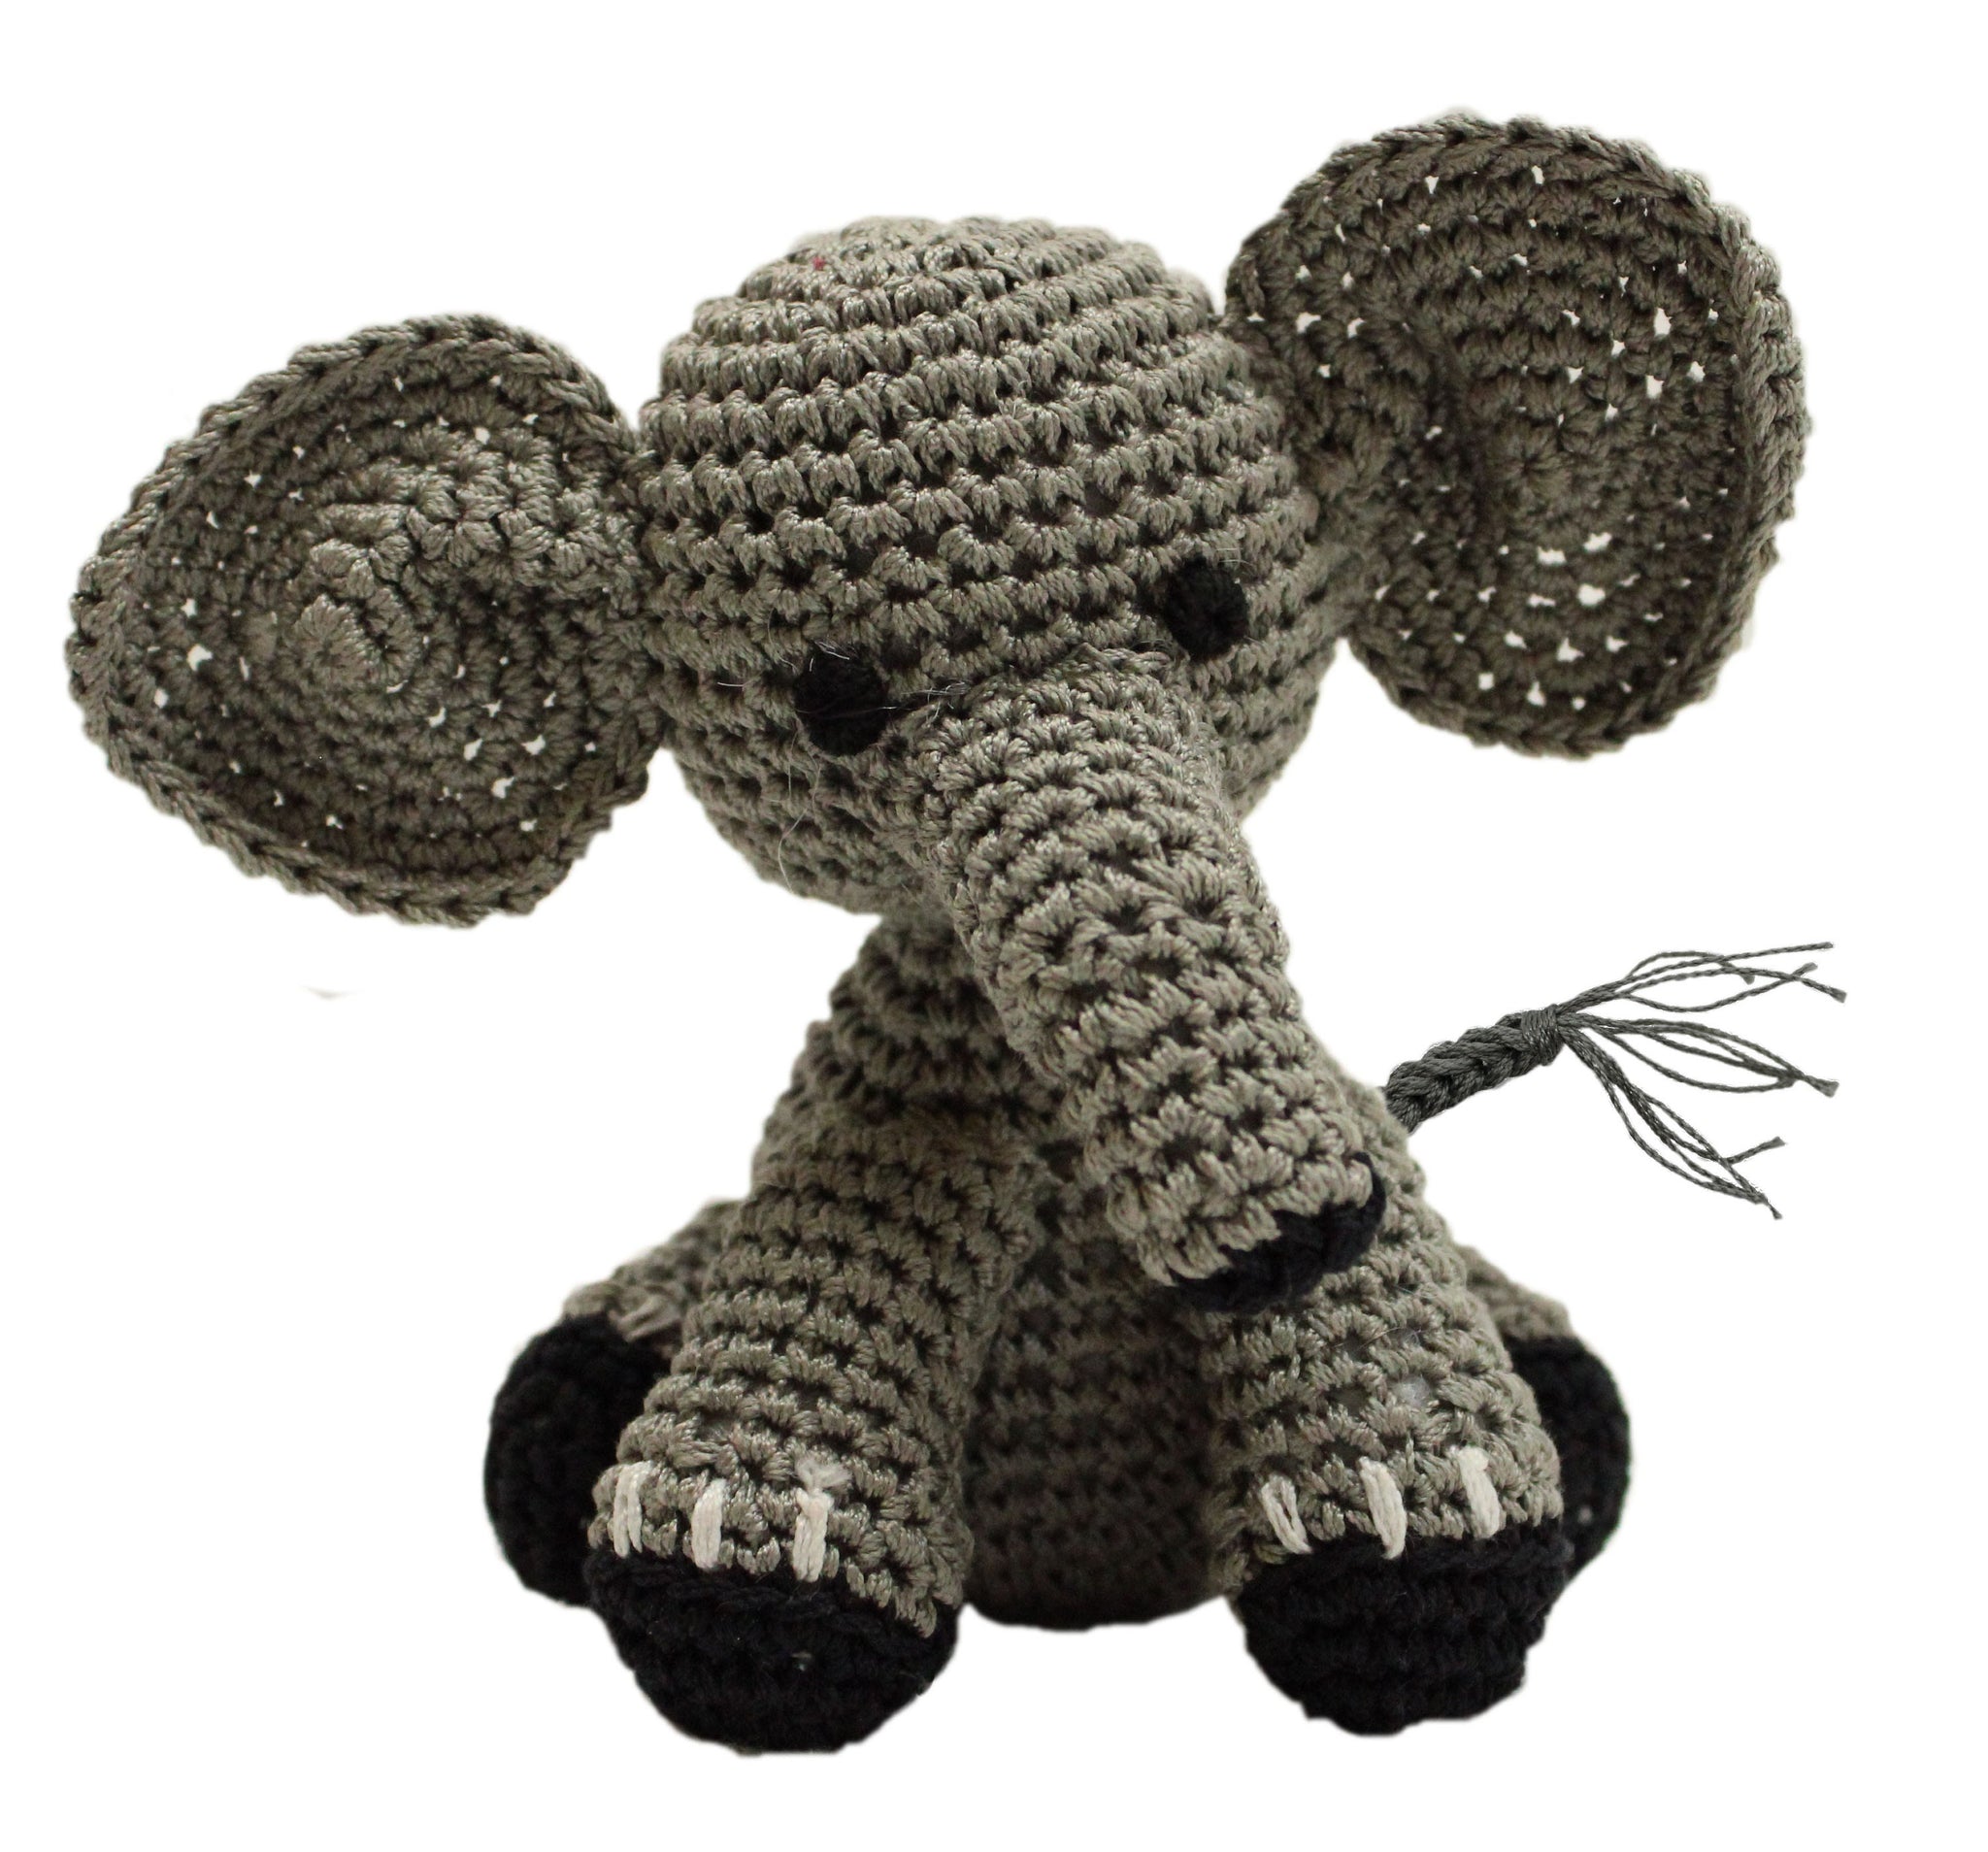 Knit Knacks Organic Cotton Pet, Dog Toys, "Animals" (Choose from: Sloth, Zebra, Giraffe, Hyena, Elephant, Lion, or Sea Turtle)